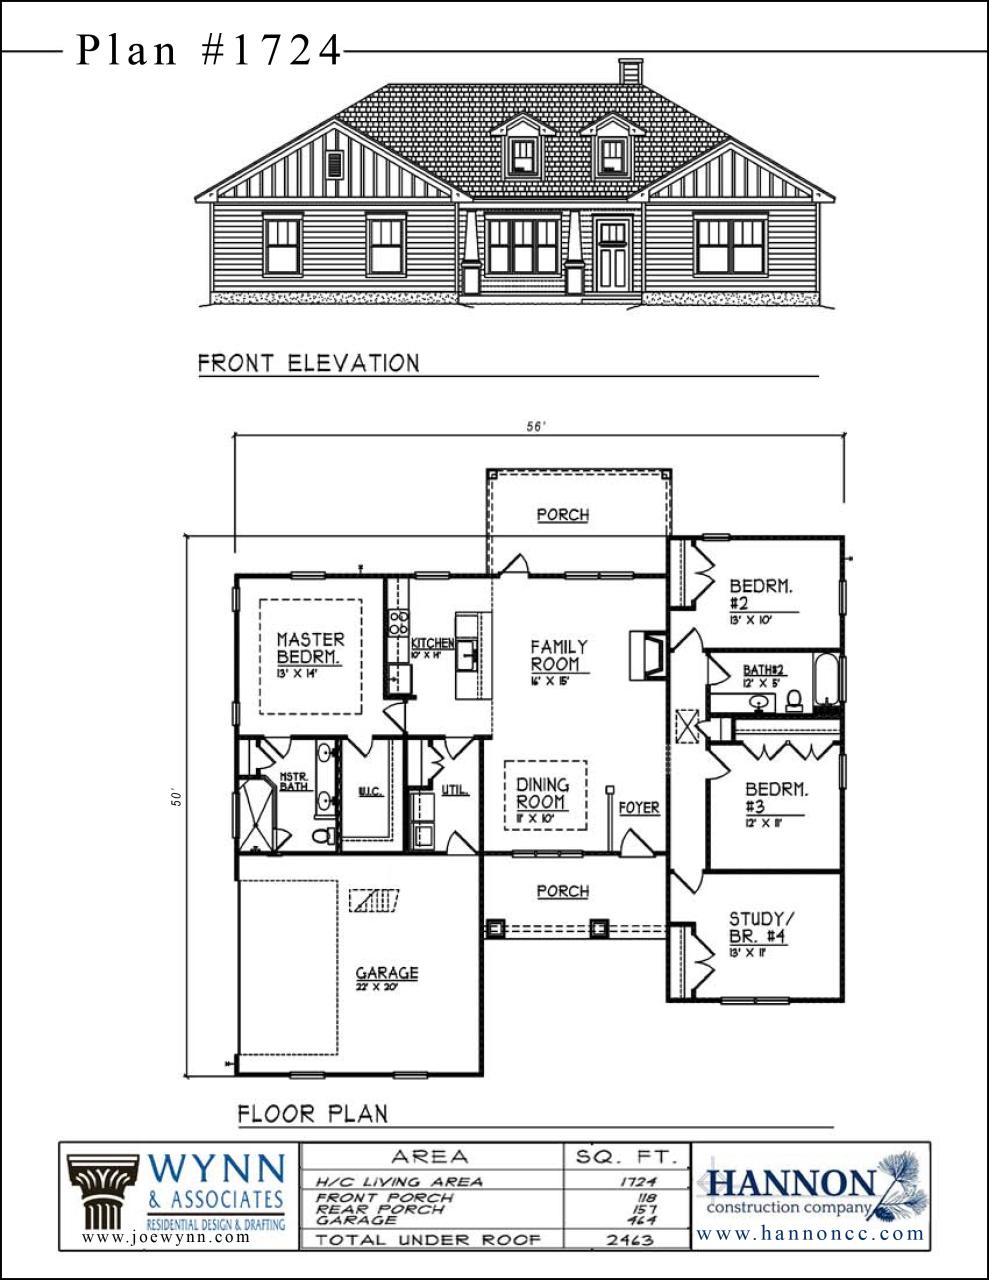 House Plans Hannon Construction Company